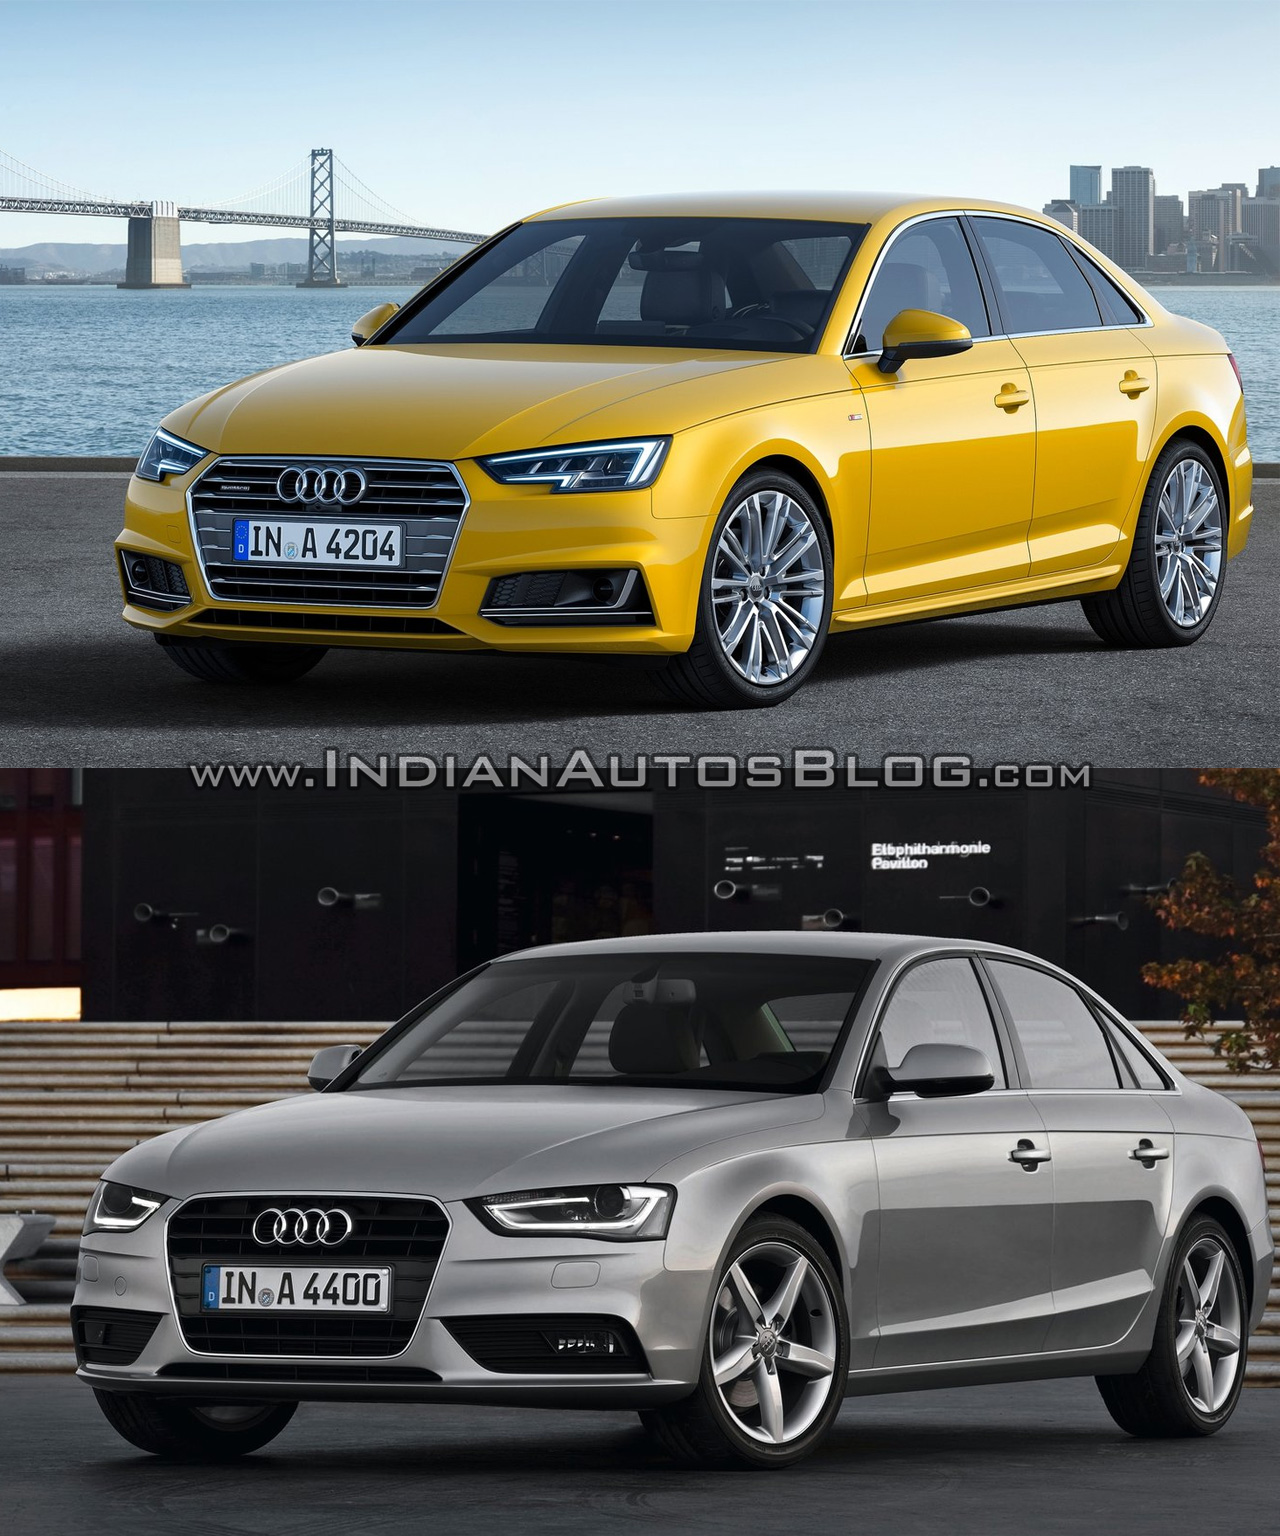 https://img.indianautosblog.com/2015/06/2016-Audi-A4-B9-vs-2013-Audi-A4-B8-front-three-quarter-old-vs-new.jpg